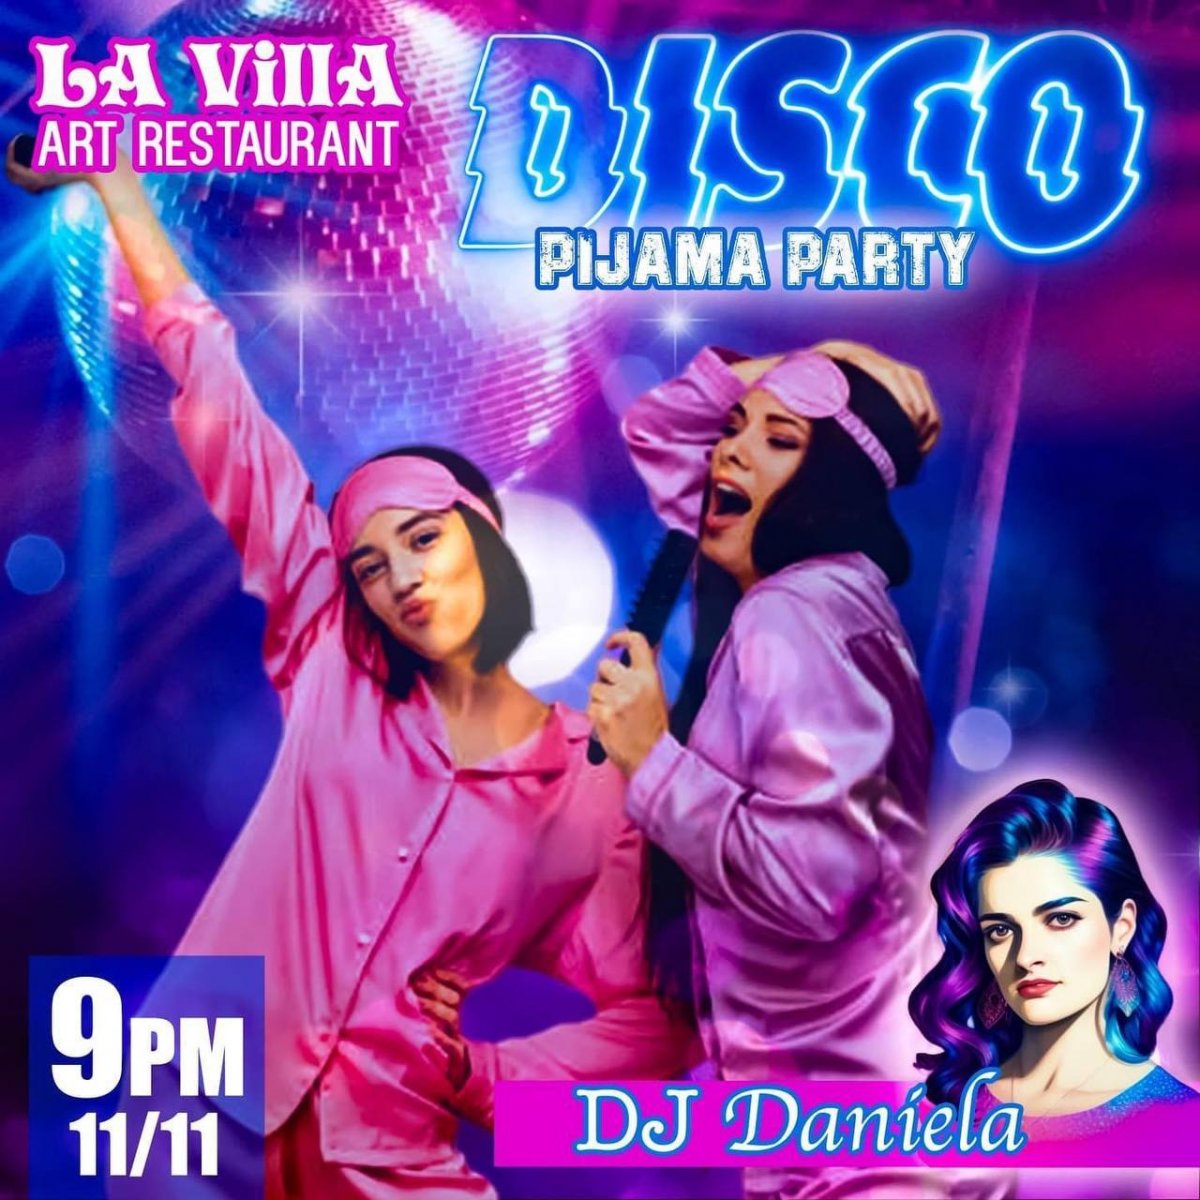 Pijama disco party